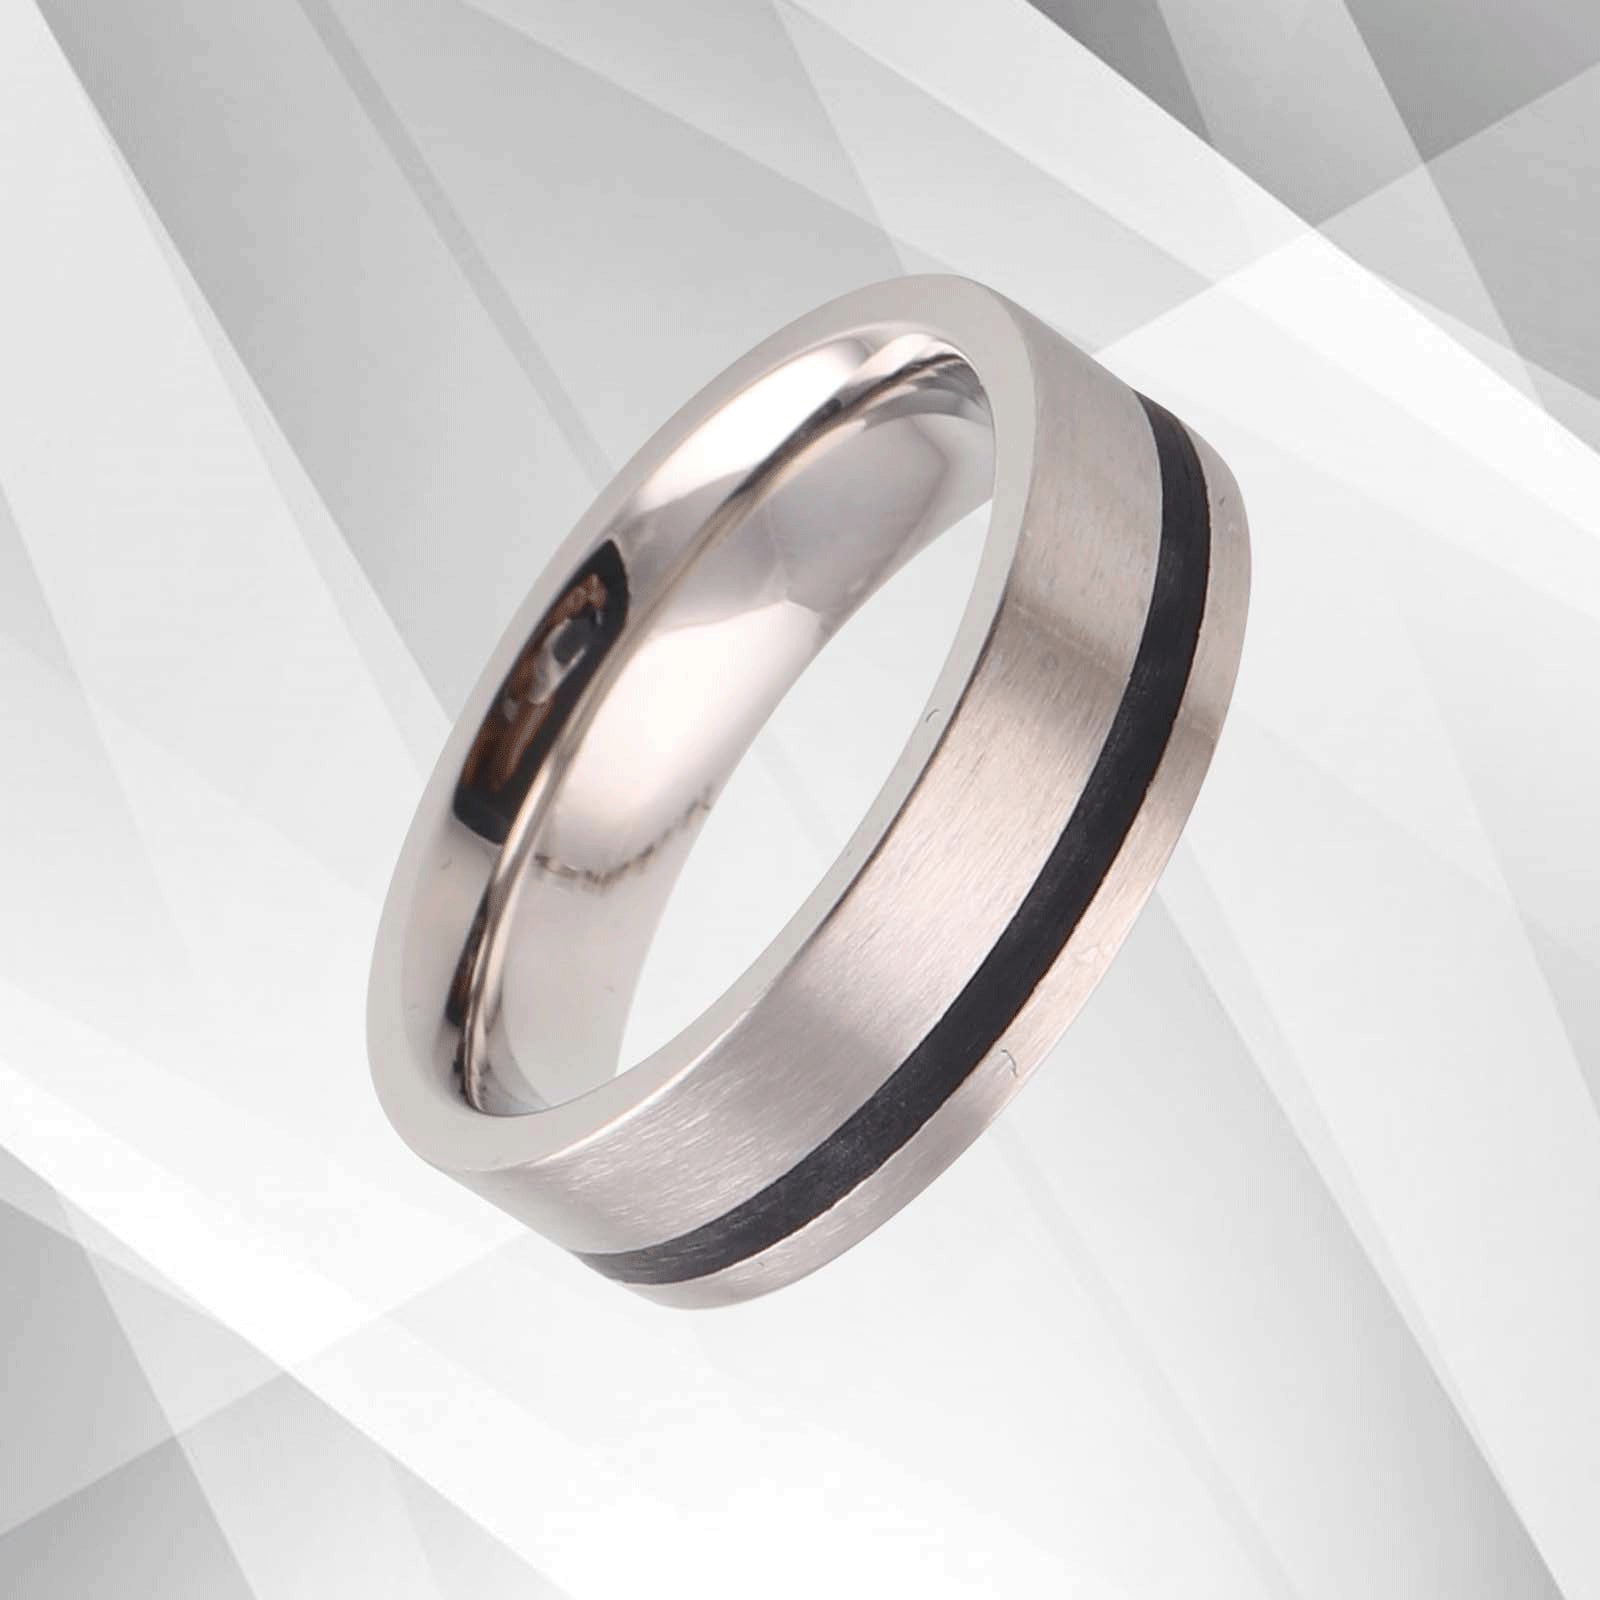 Stylish Designer Titanium Wedding Band Ring - Hypoallergenic, 6mm Wide Flat Shape, Comfort Fit, Men's Engagement Anniversary Gift - Jewelry & Watches - Bijou Her -  -  - 